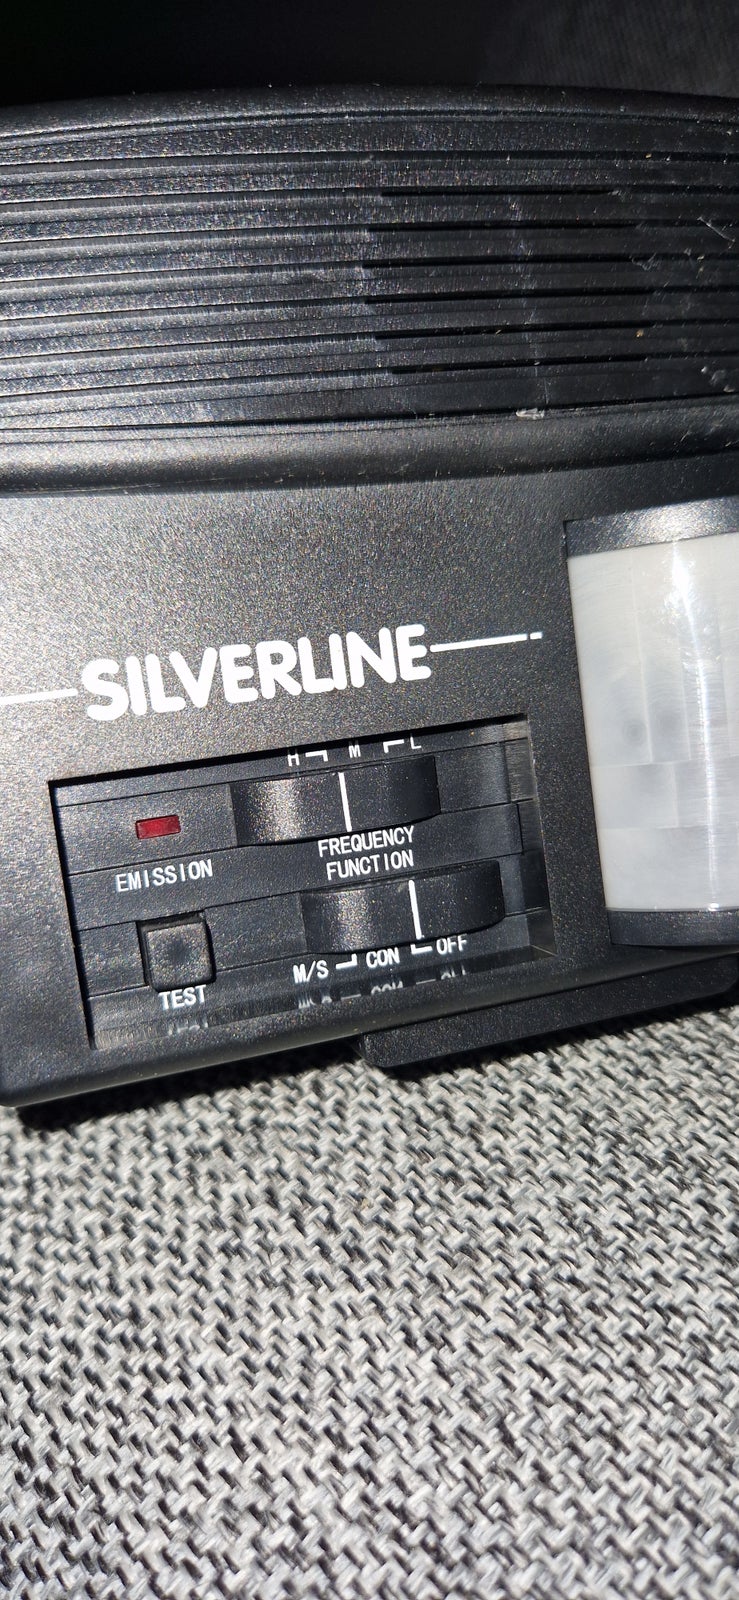 Sensor, Silverline